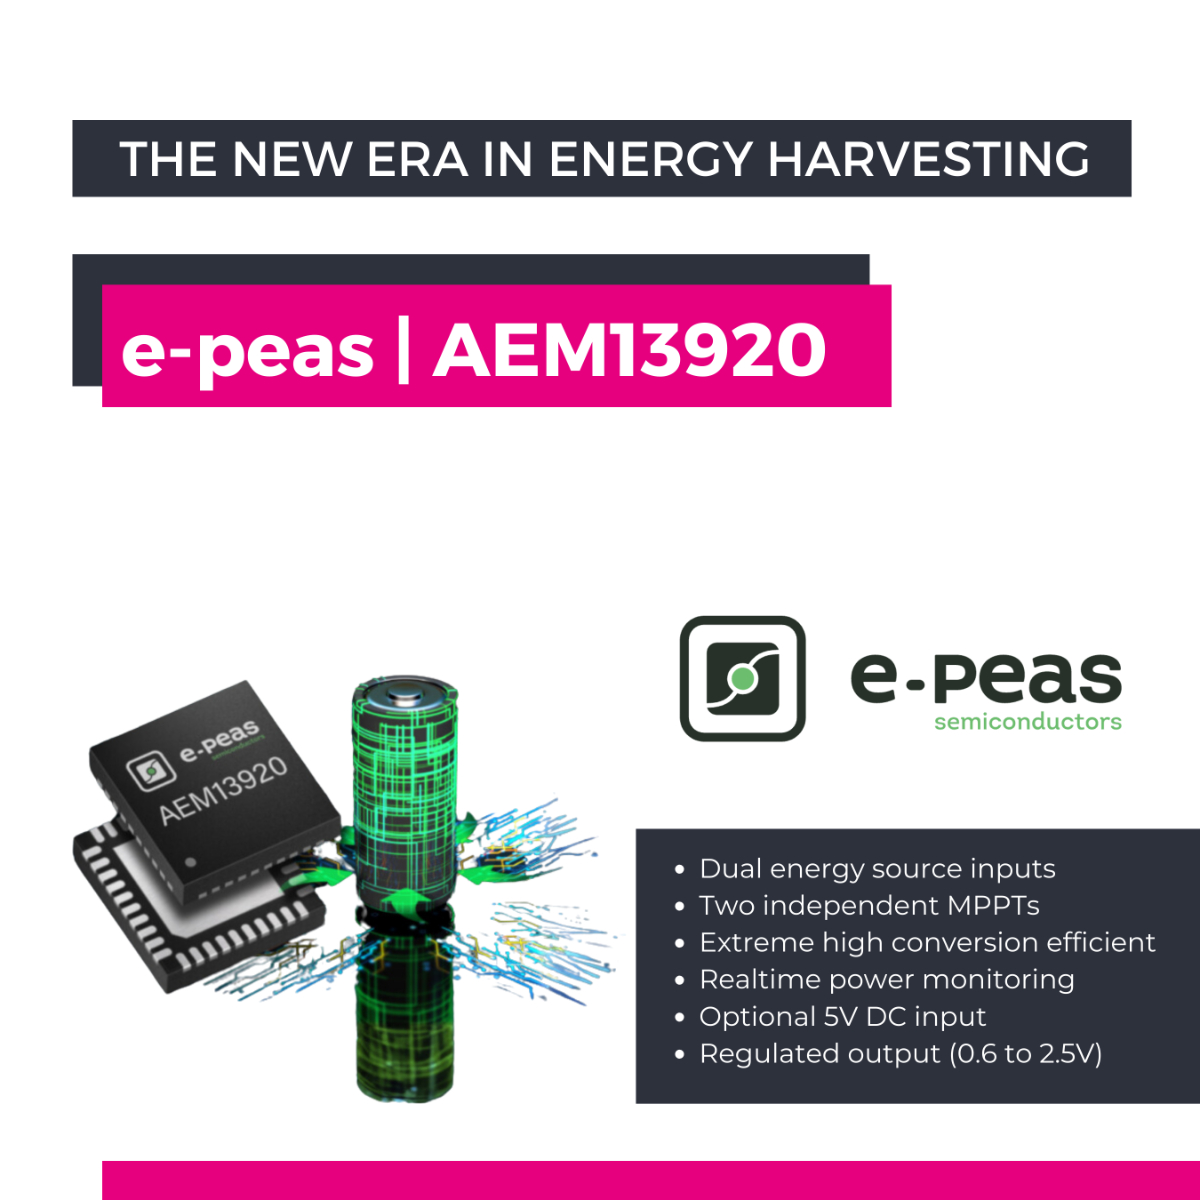 epeas aem 13920 opens new era of energy harvesting